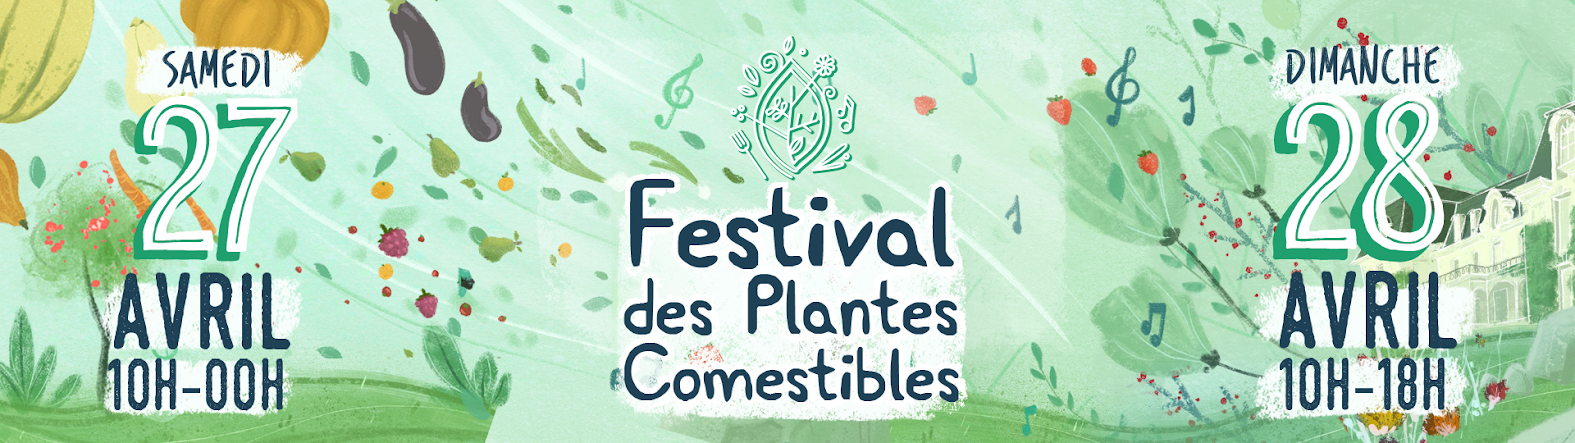 Invitation au festival des plantes comestibles